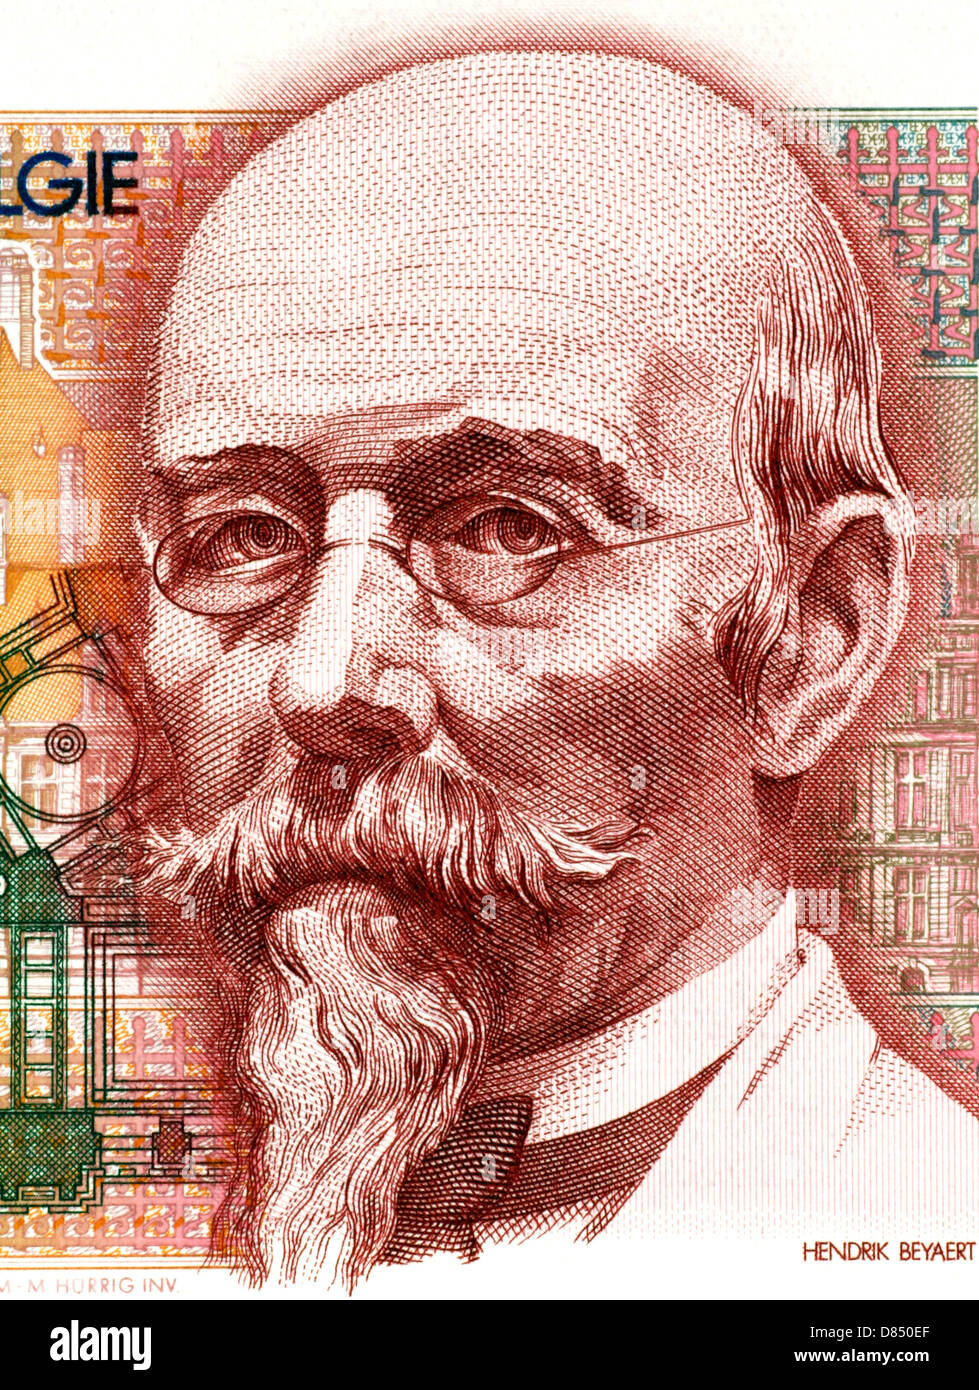 Hendrik Beyaert (1823-1894) on 100 Francs 1978 Banknote from Belgium. Stock Photo